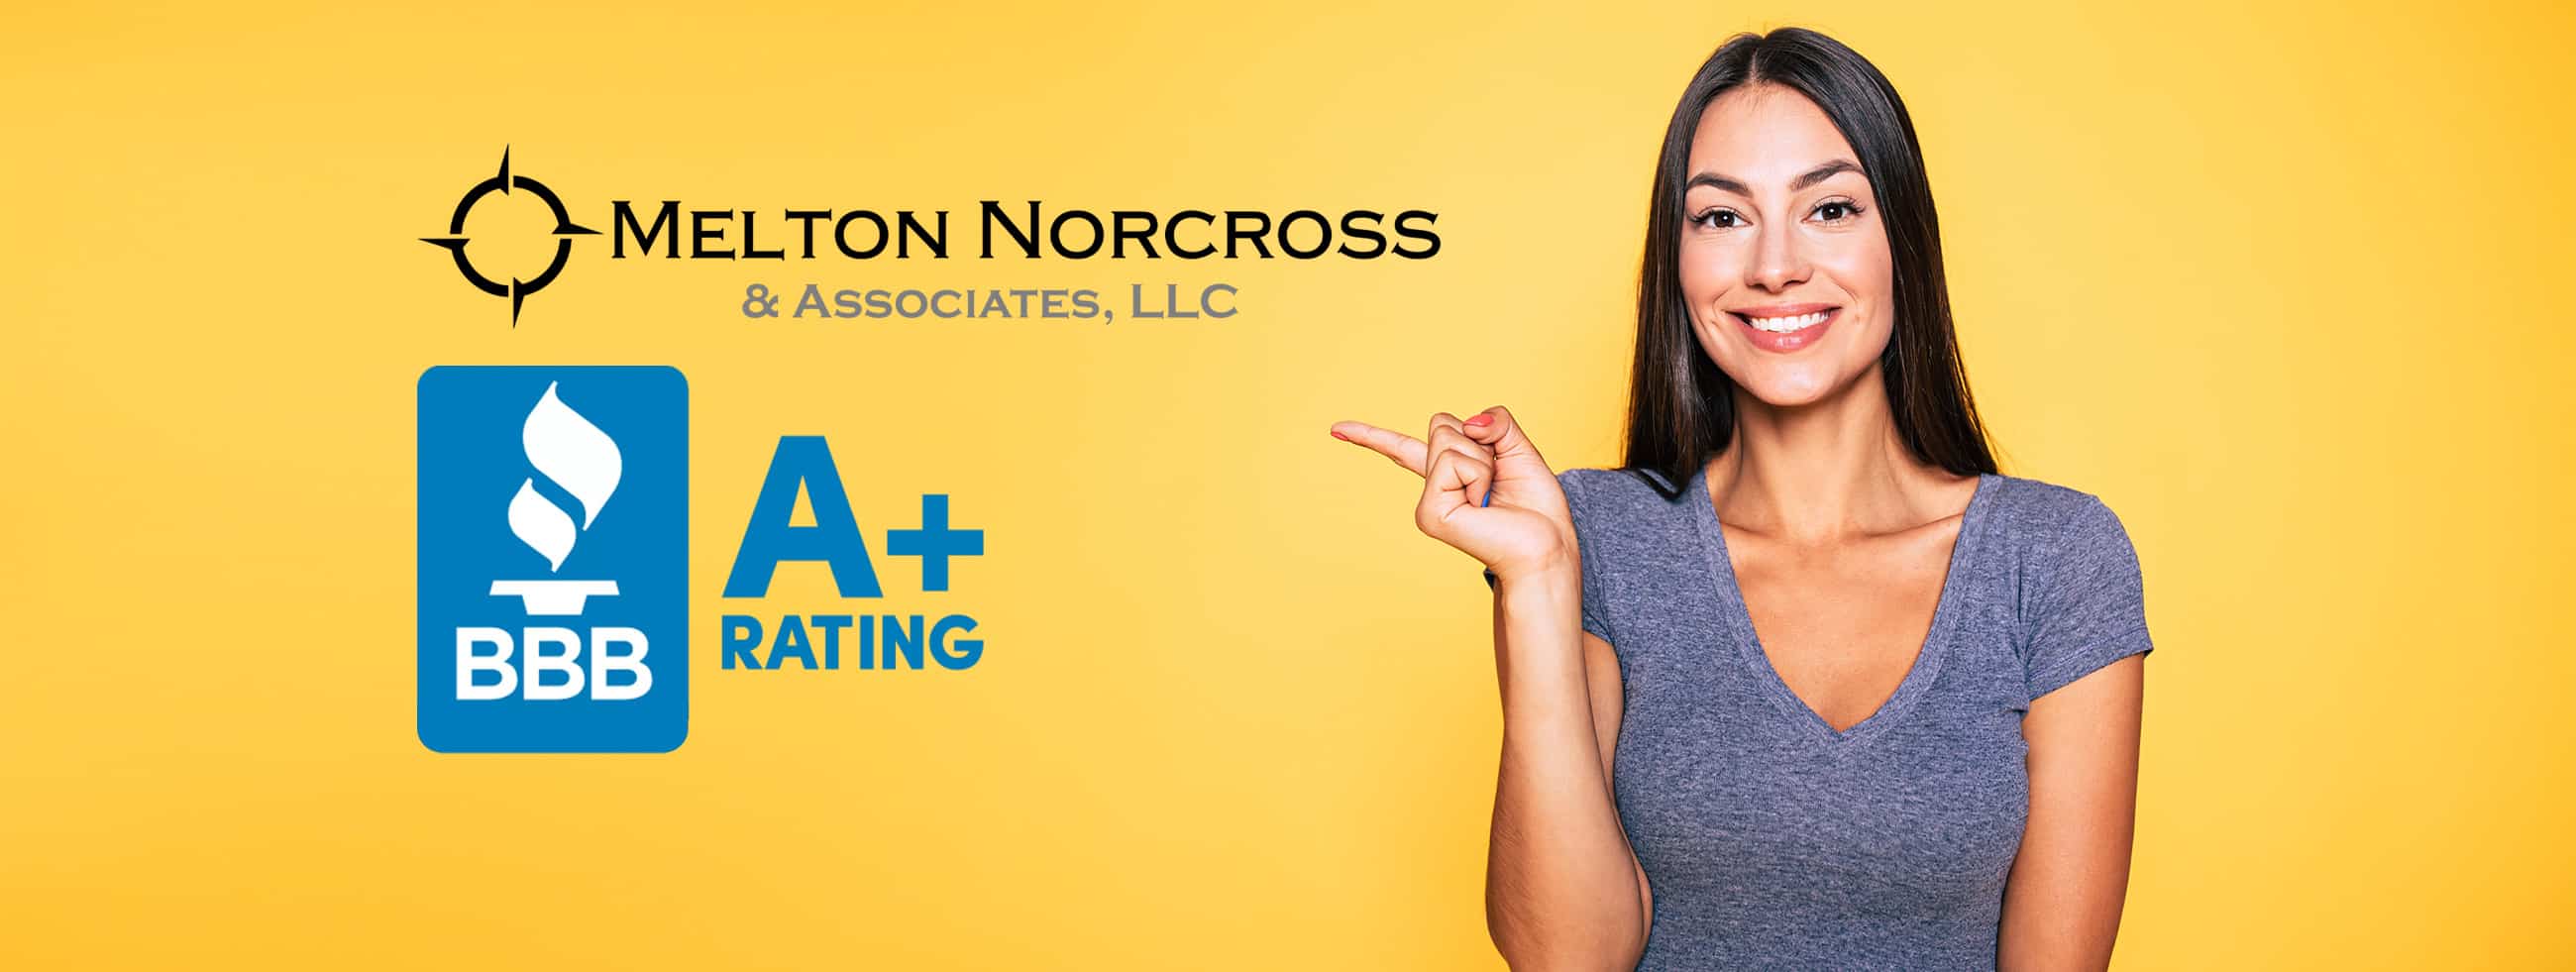 A+ BBB Rating | Melton Norcross & Associates